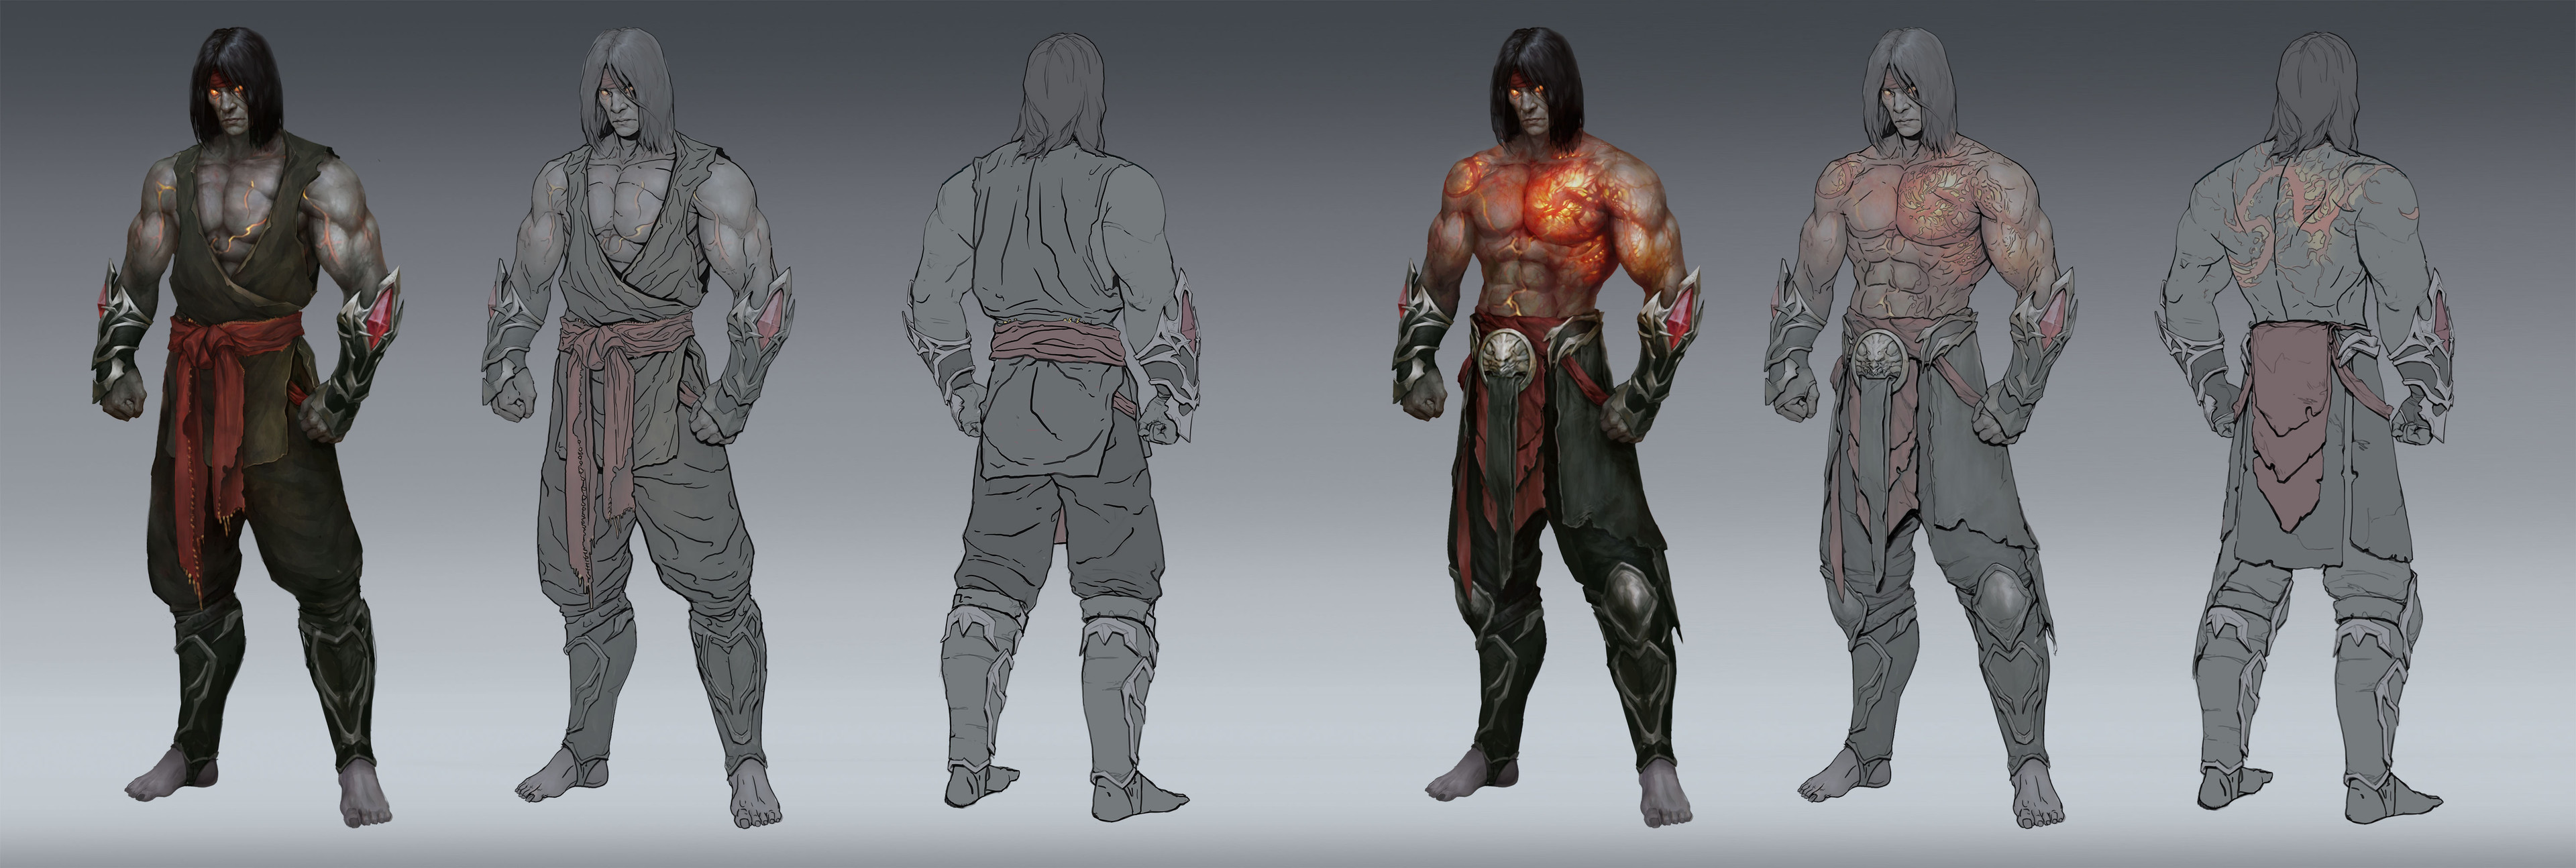 Nikola Matkovic Mortal Kombat 11 Concept Art